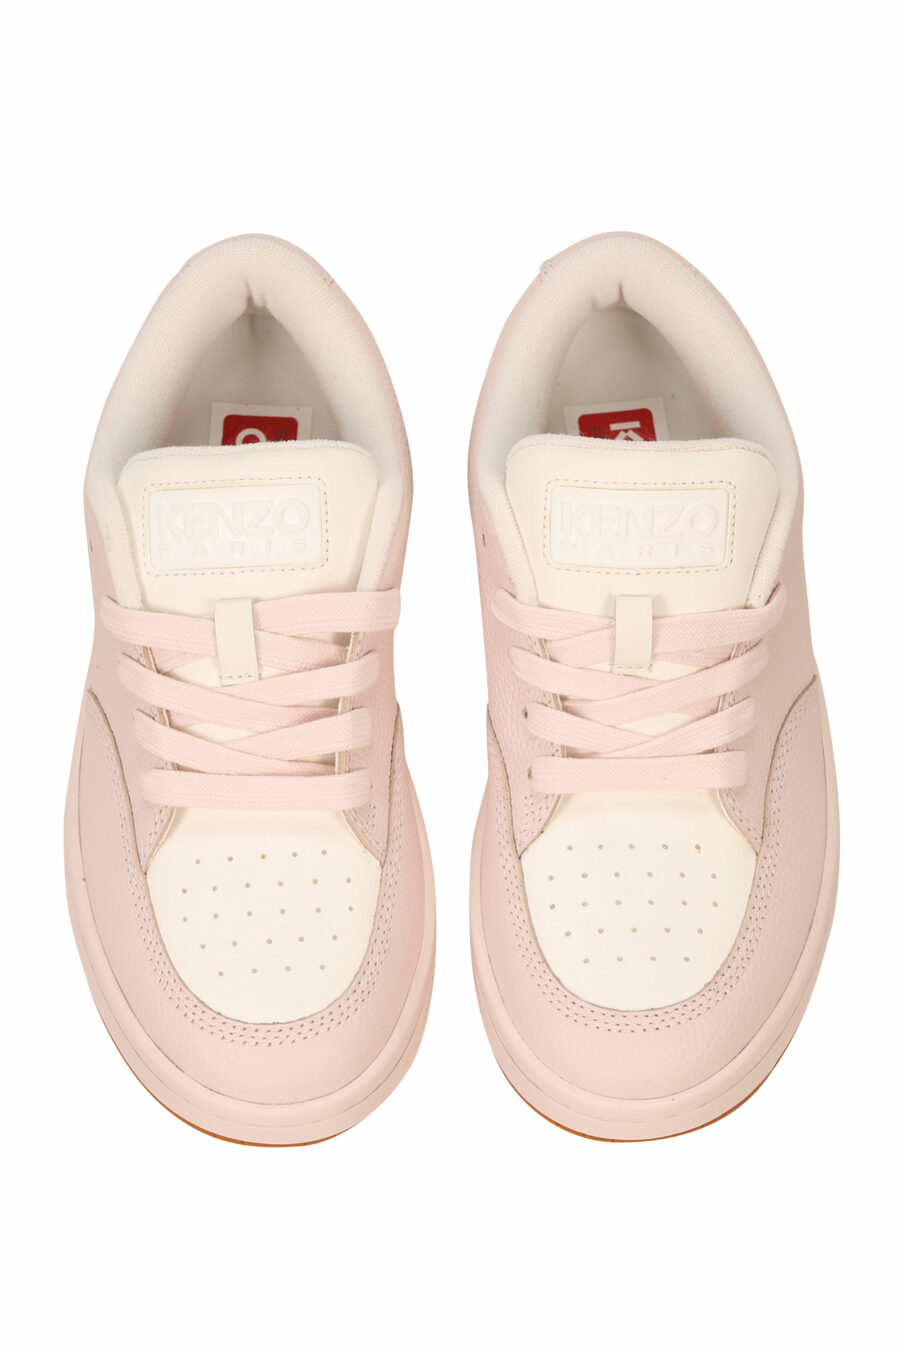 Zapatillas rosas "kenzo dome" con logo - 3612230654280 4